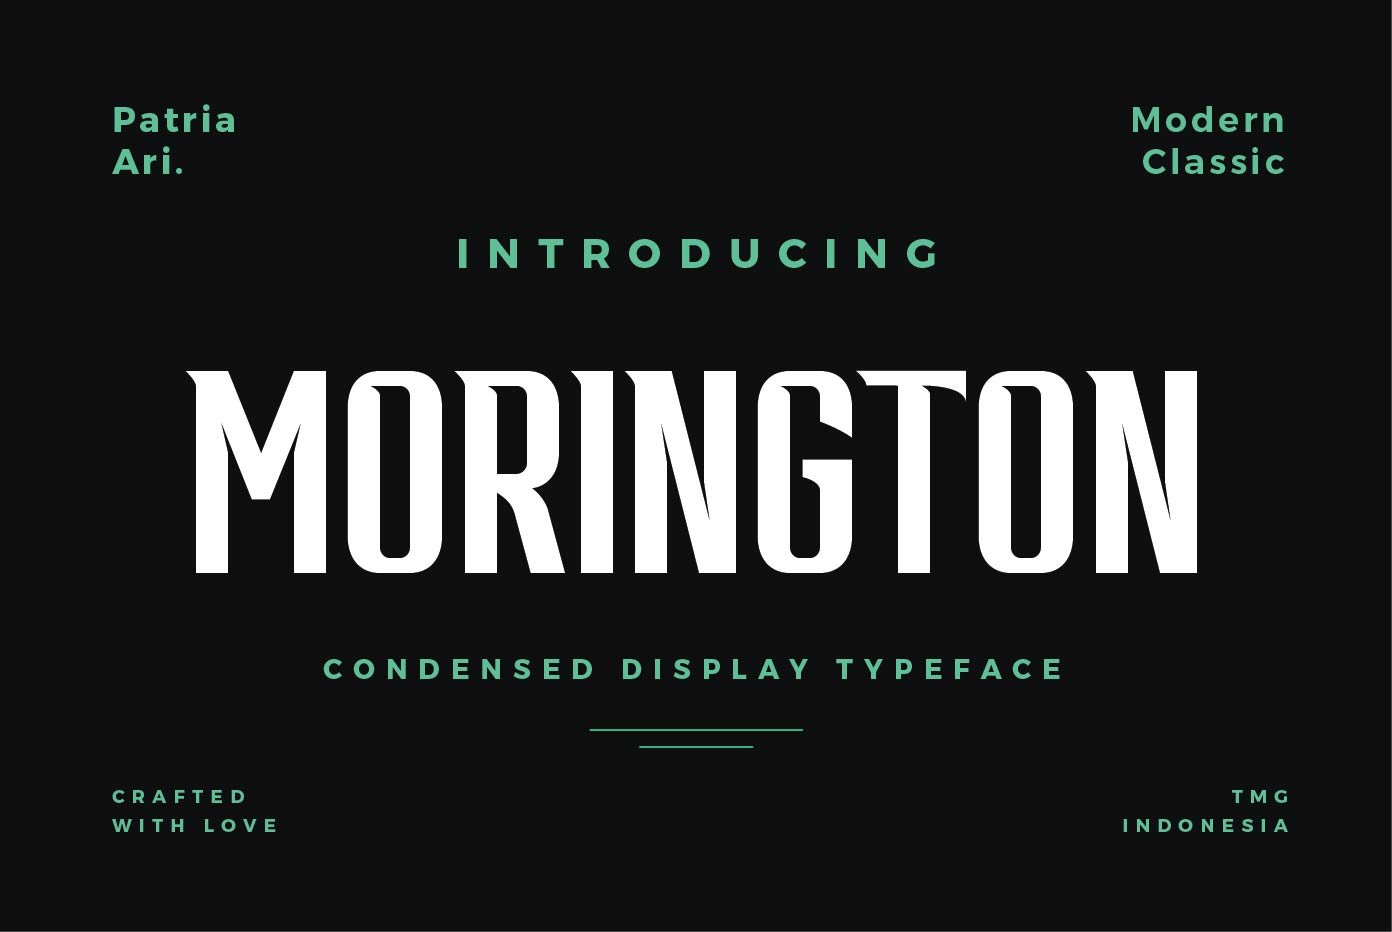 Morington Display Typeface cover image.